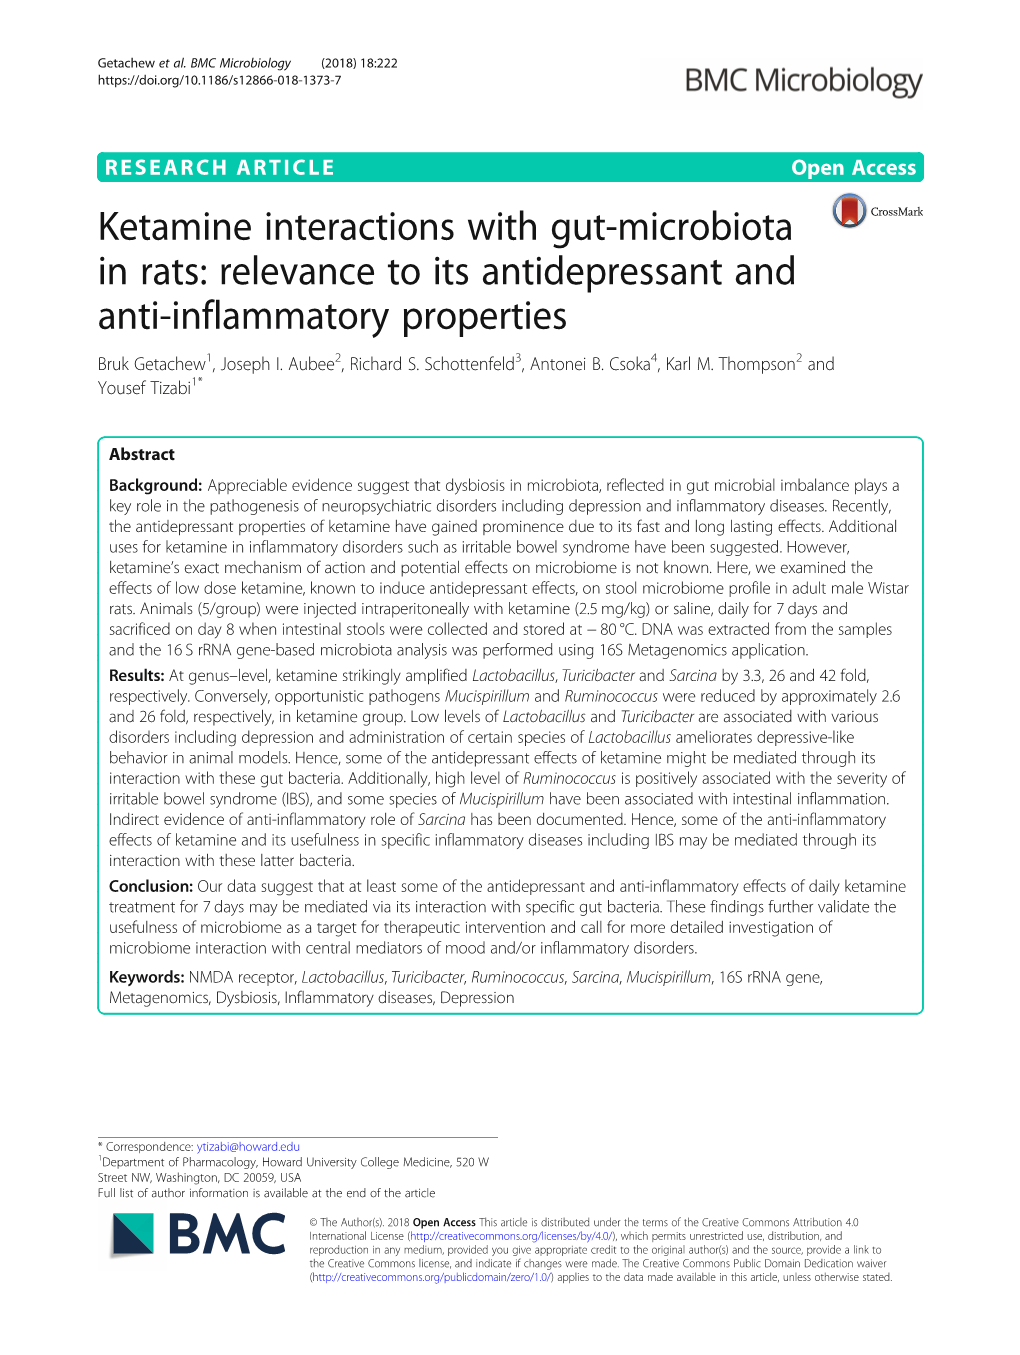 Ketamine Interactions with Gut-Microbiota in Rats: Relevance to Its Antidepressant and Anti-Inflammatory Properties Bruk Getachew1, Joseph I